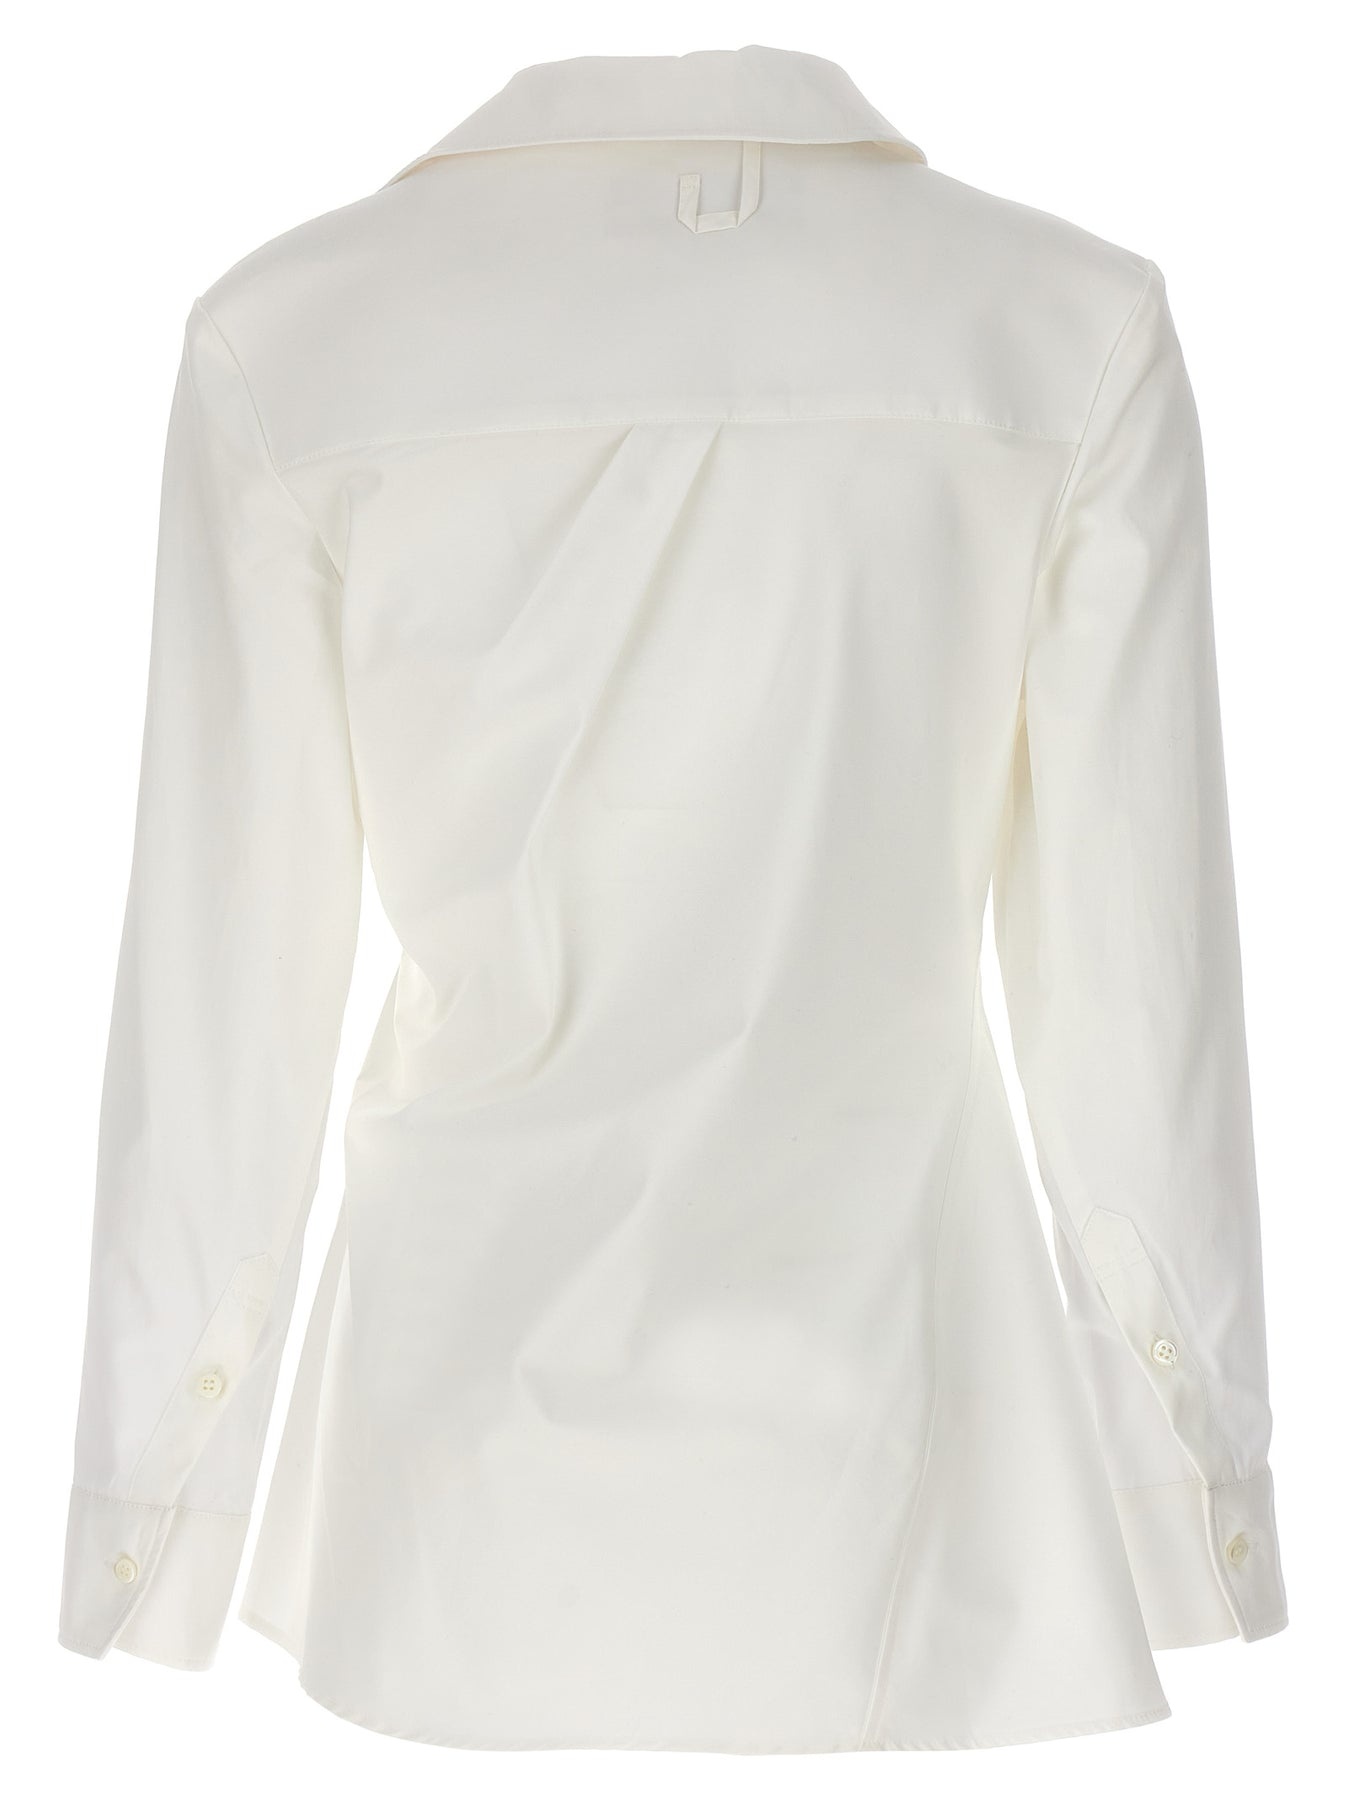 La Chemise Pablo Shirt, Blouse White - 2